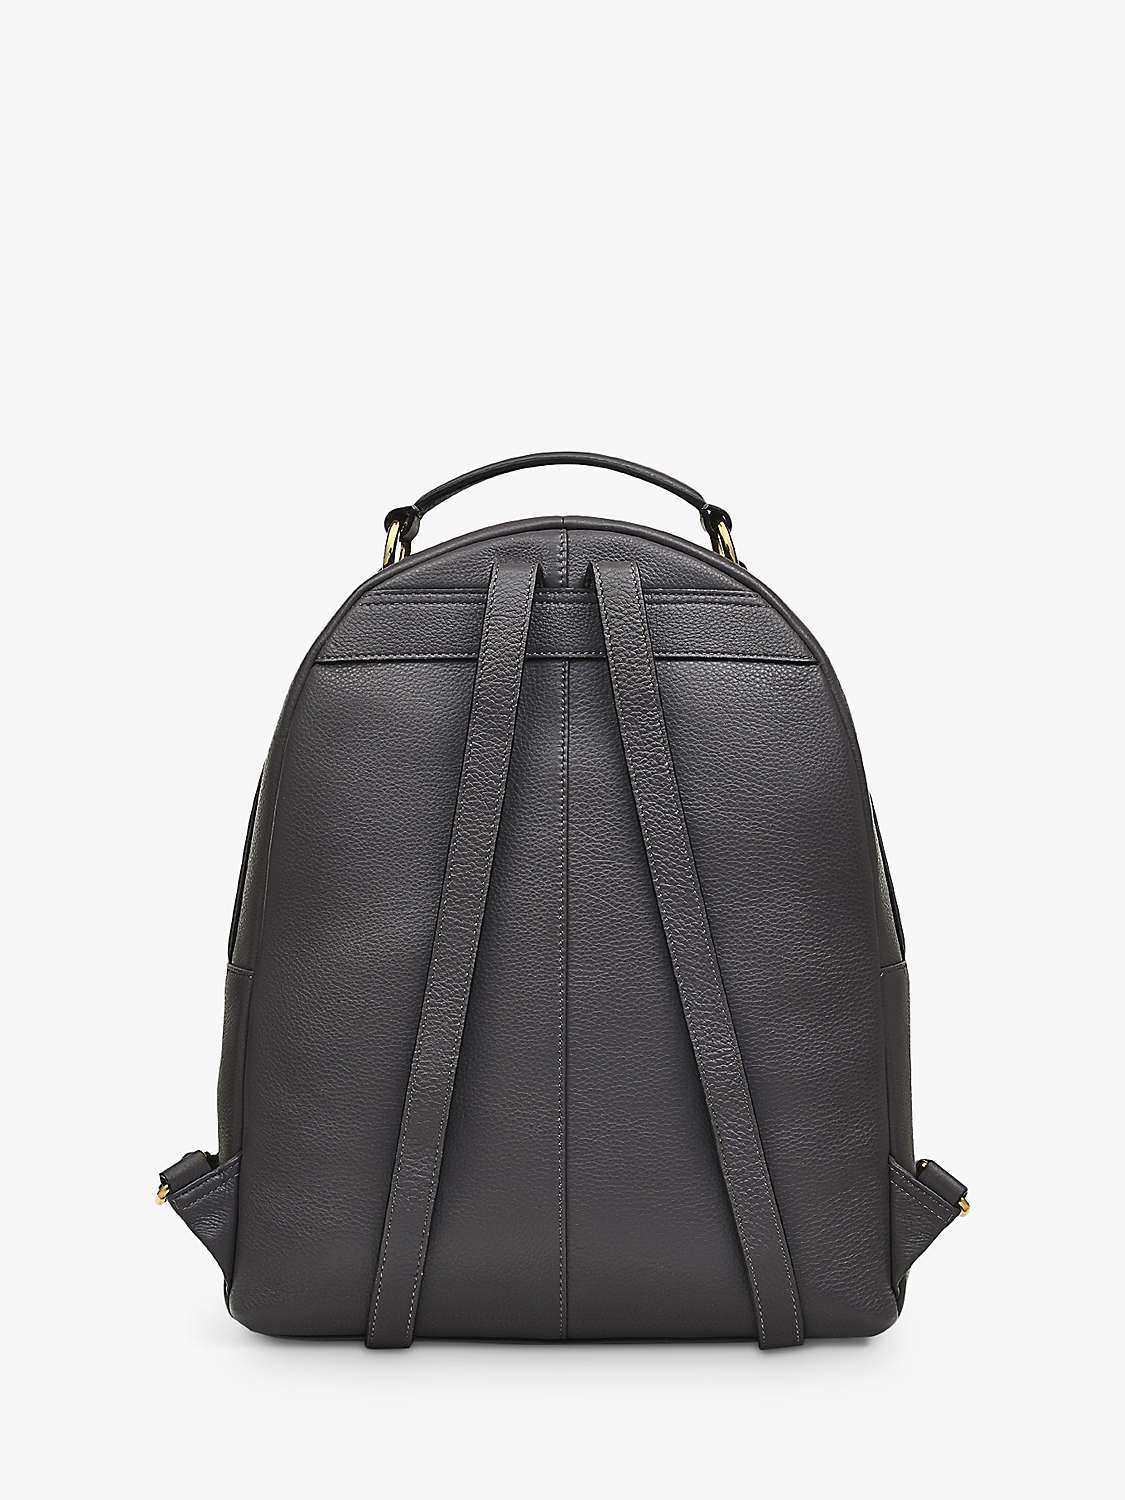 Buy Radley Witham Road Medium Leather Backpack Online at johnlewis.com